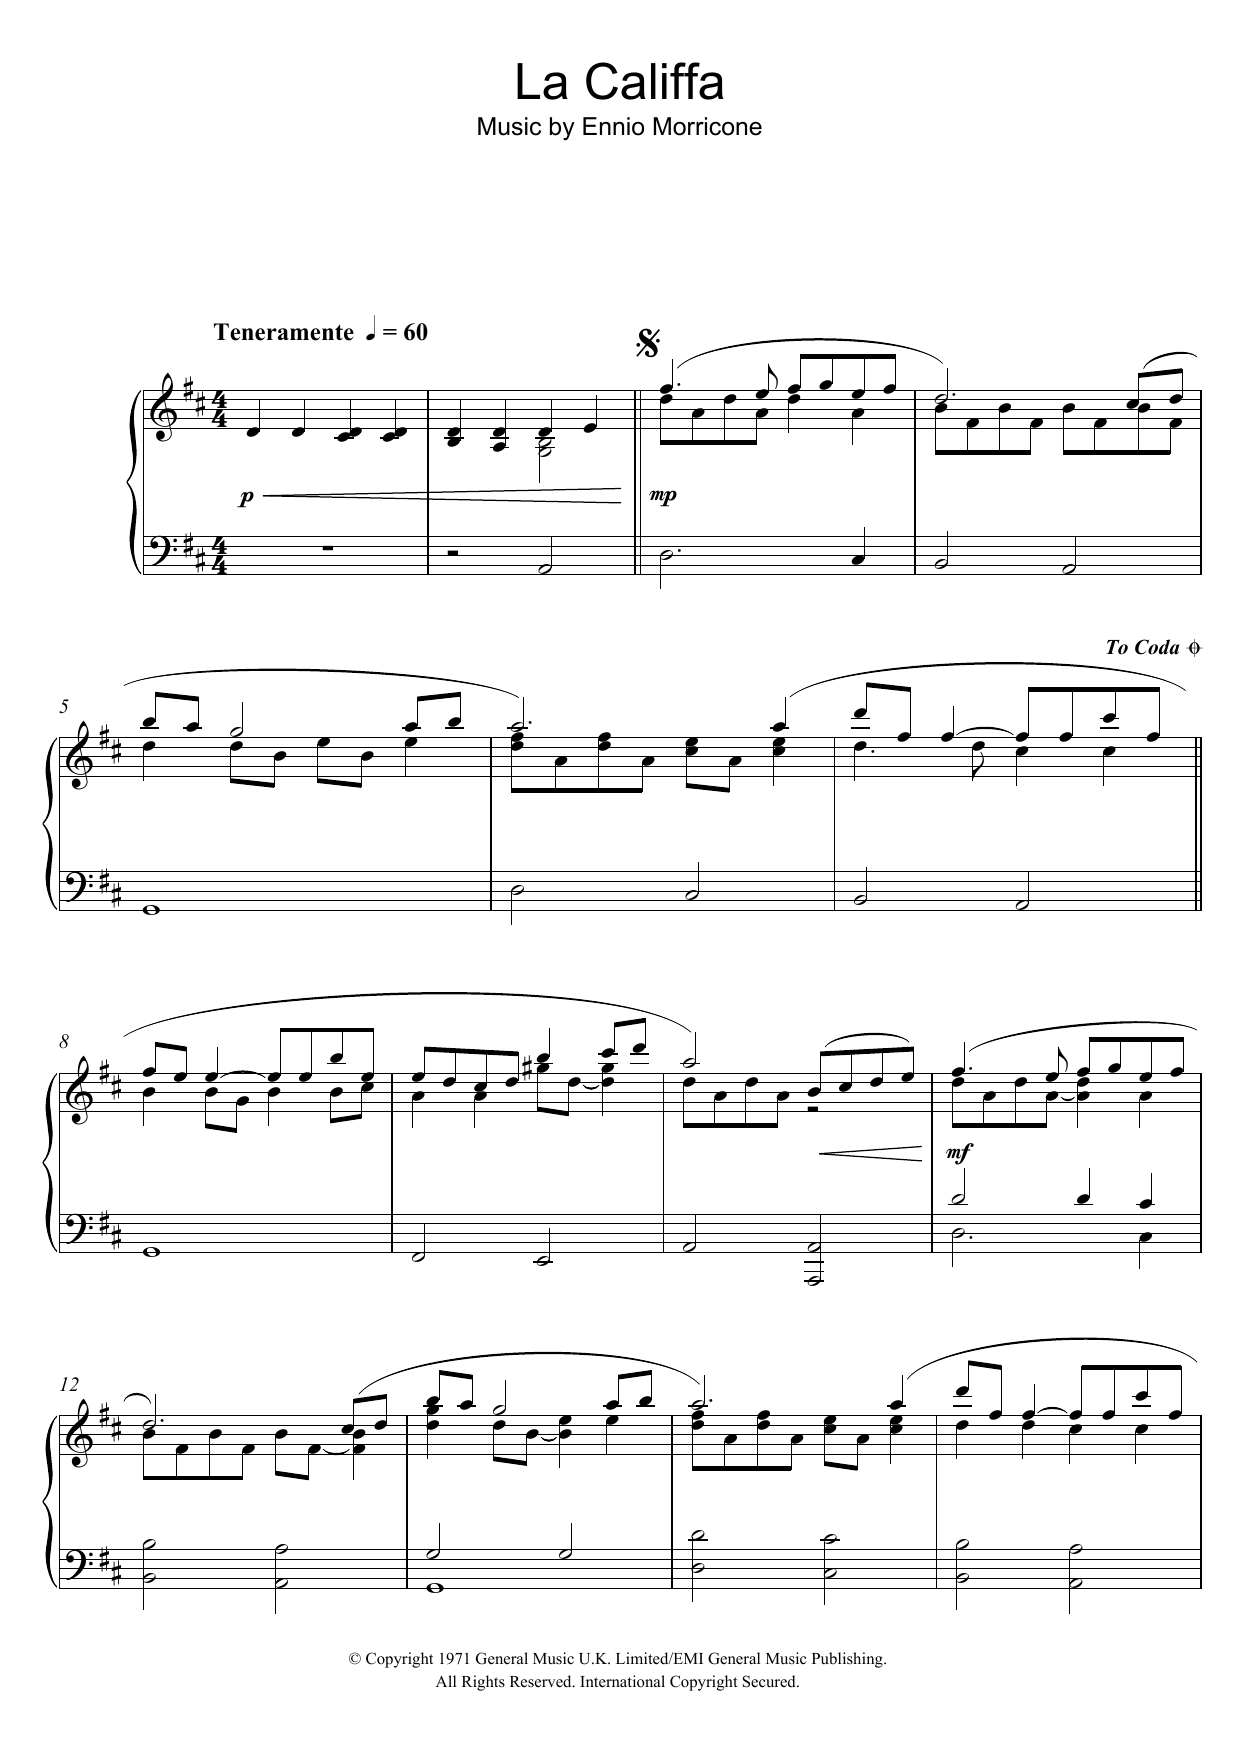 Ennio Morricone La Califfa Sheet Music Notes & Chords for Piano - Download or Print PDF